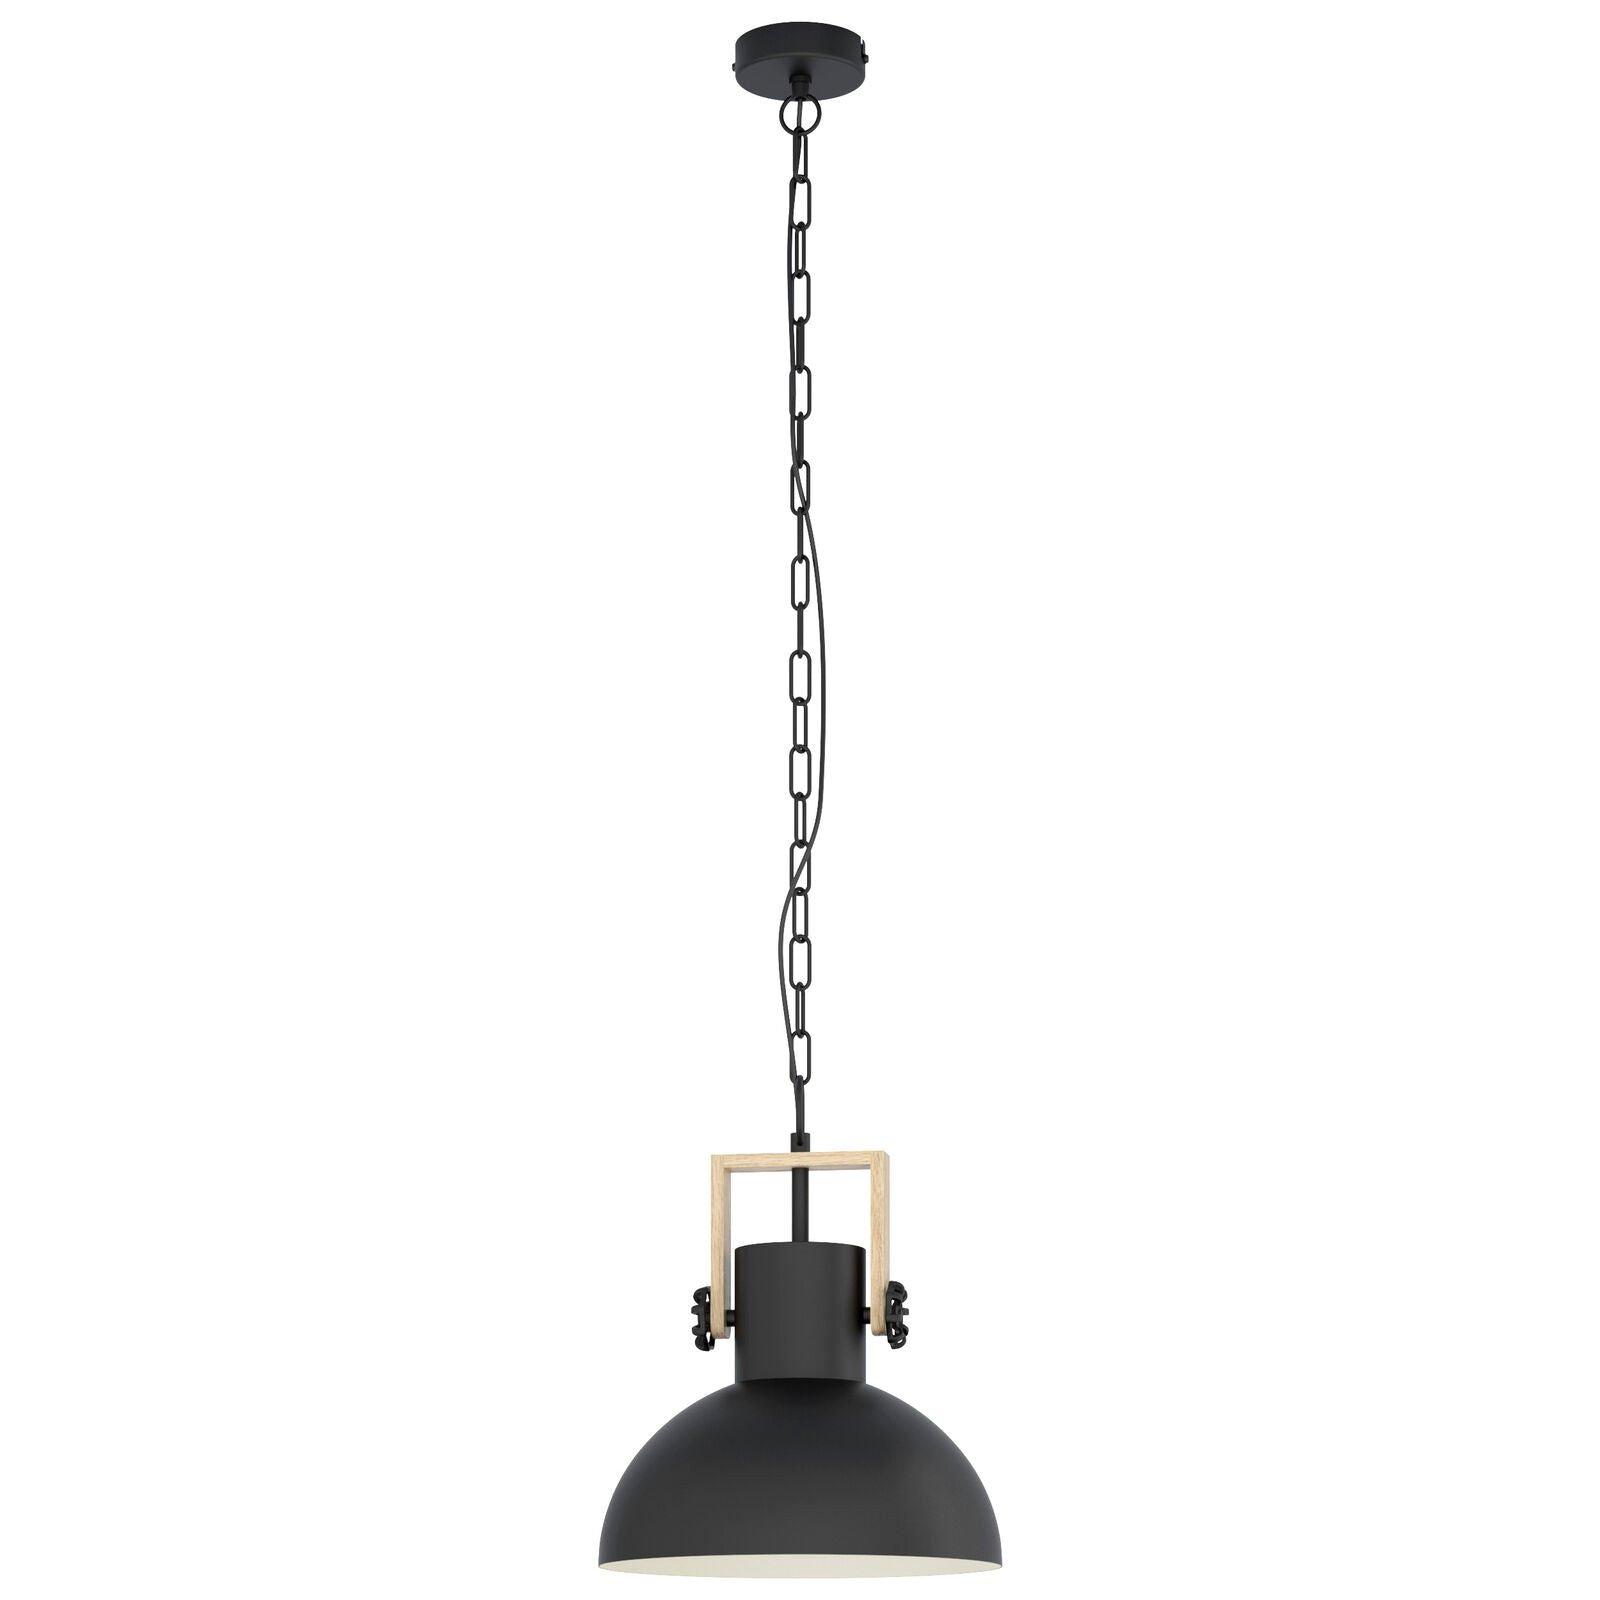 Hanging Ceiling Pendant Light Black & Wood Industrial Shade 1 x 28W E27 Bulb